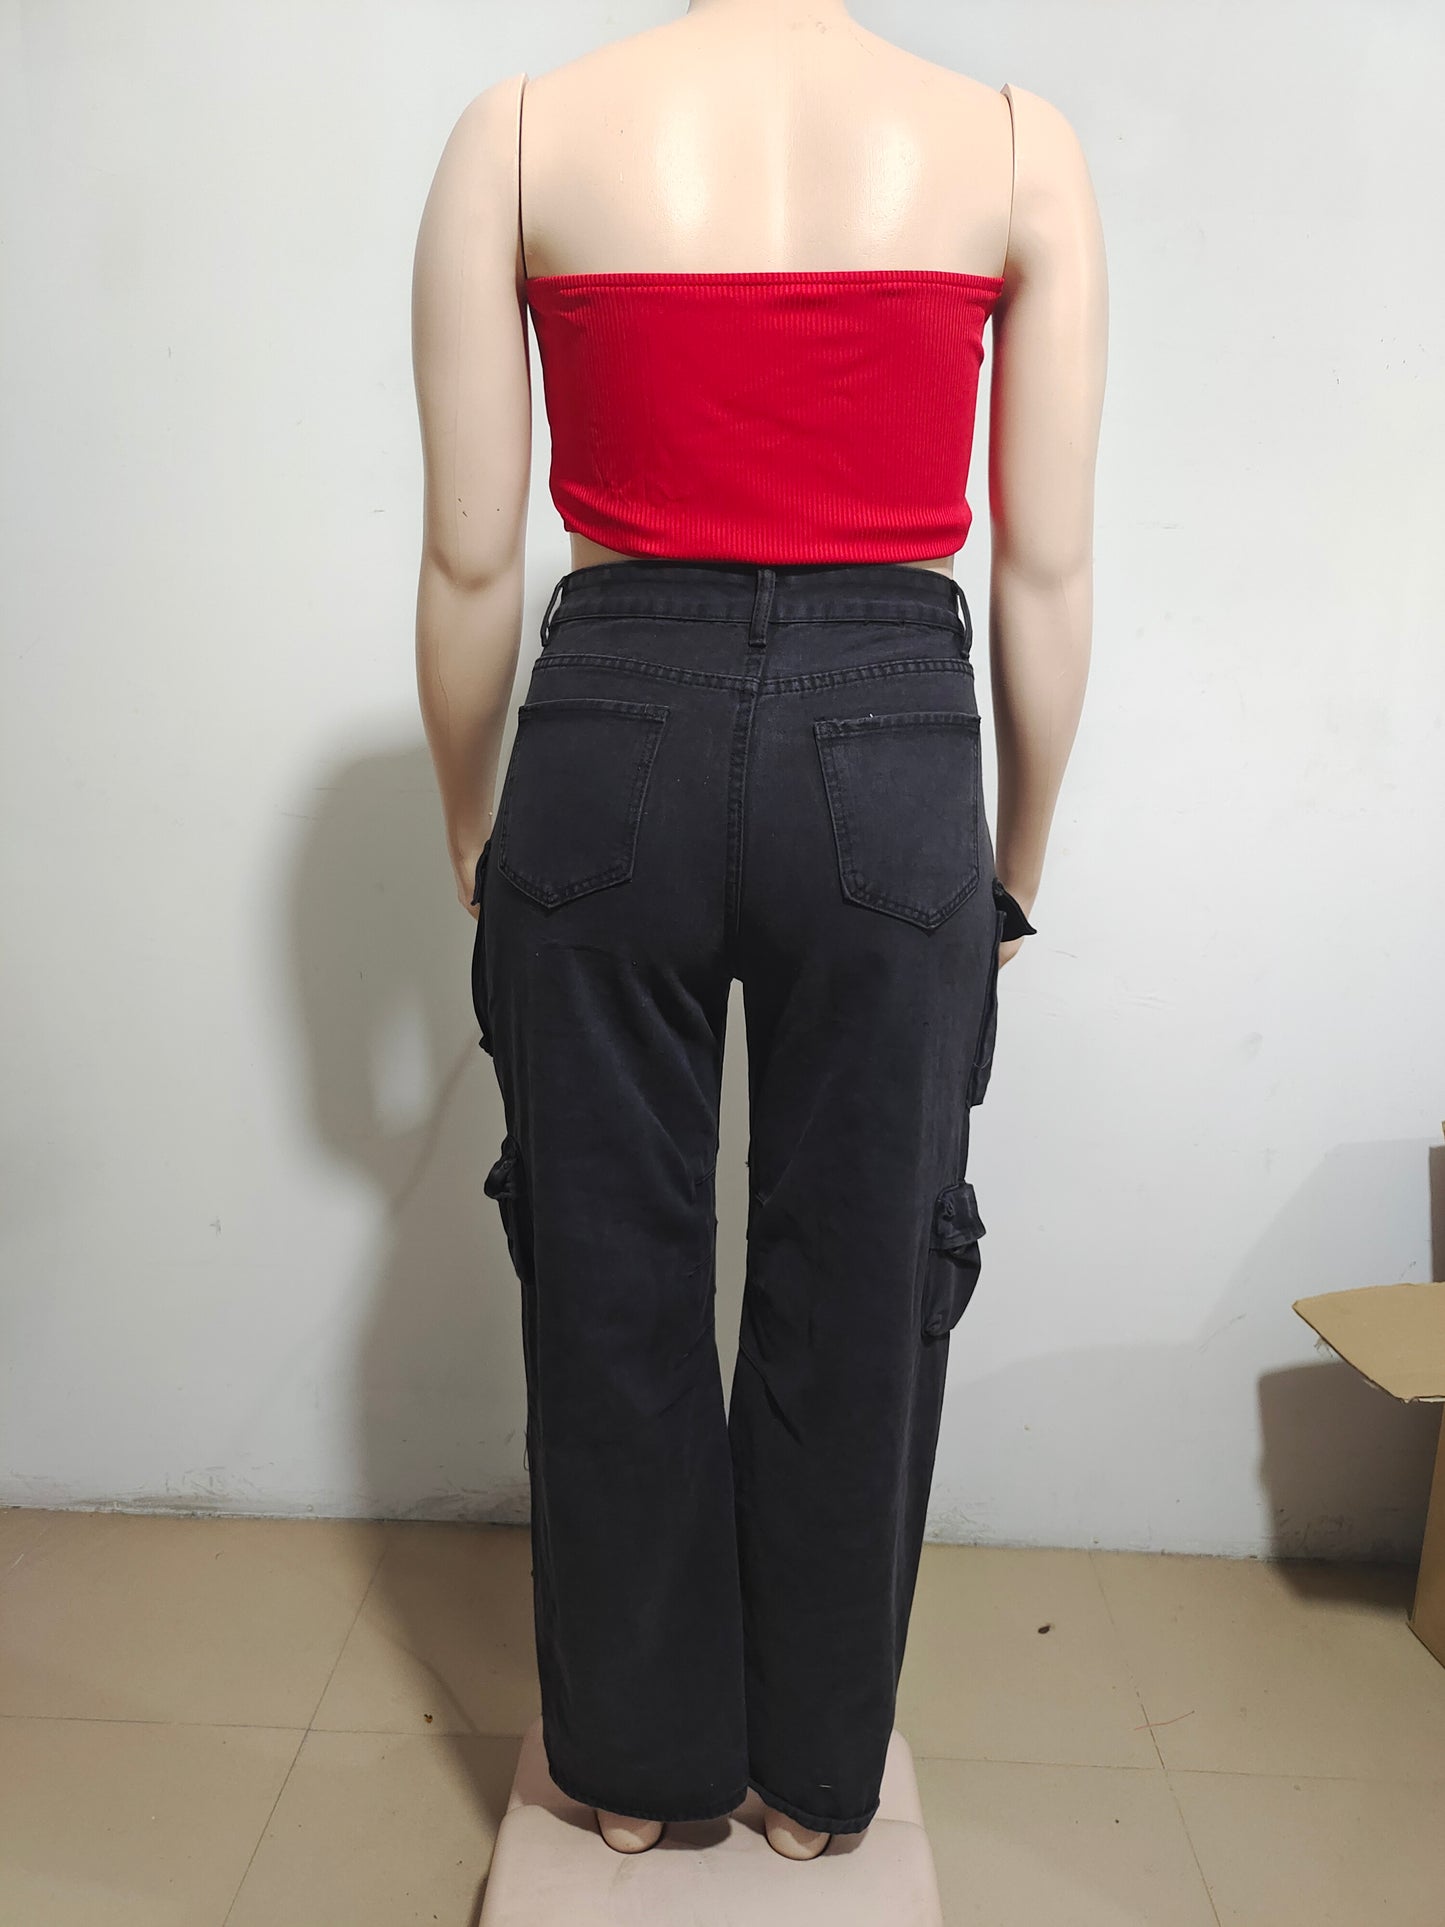 BamBam Trendy Multi Pocket Denim Pants Wash Cargo Pants Jeans - BamBam